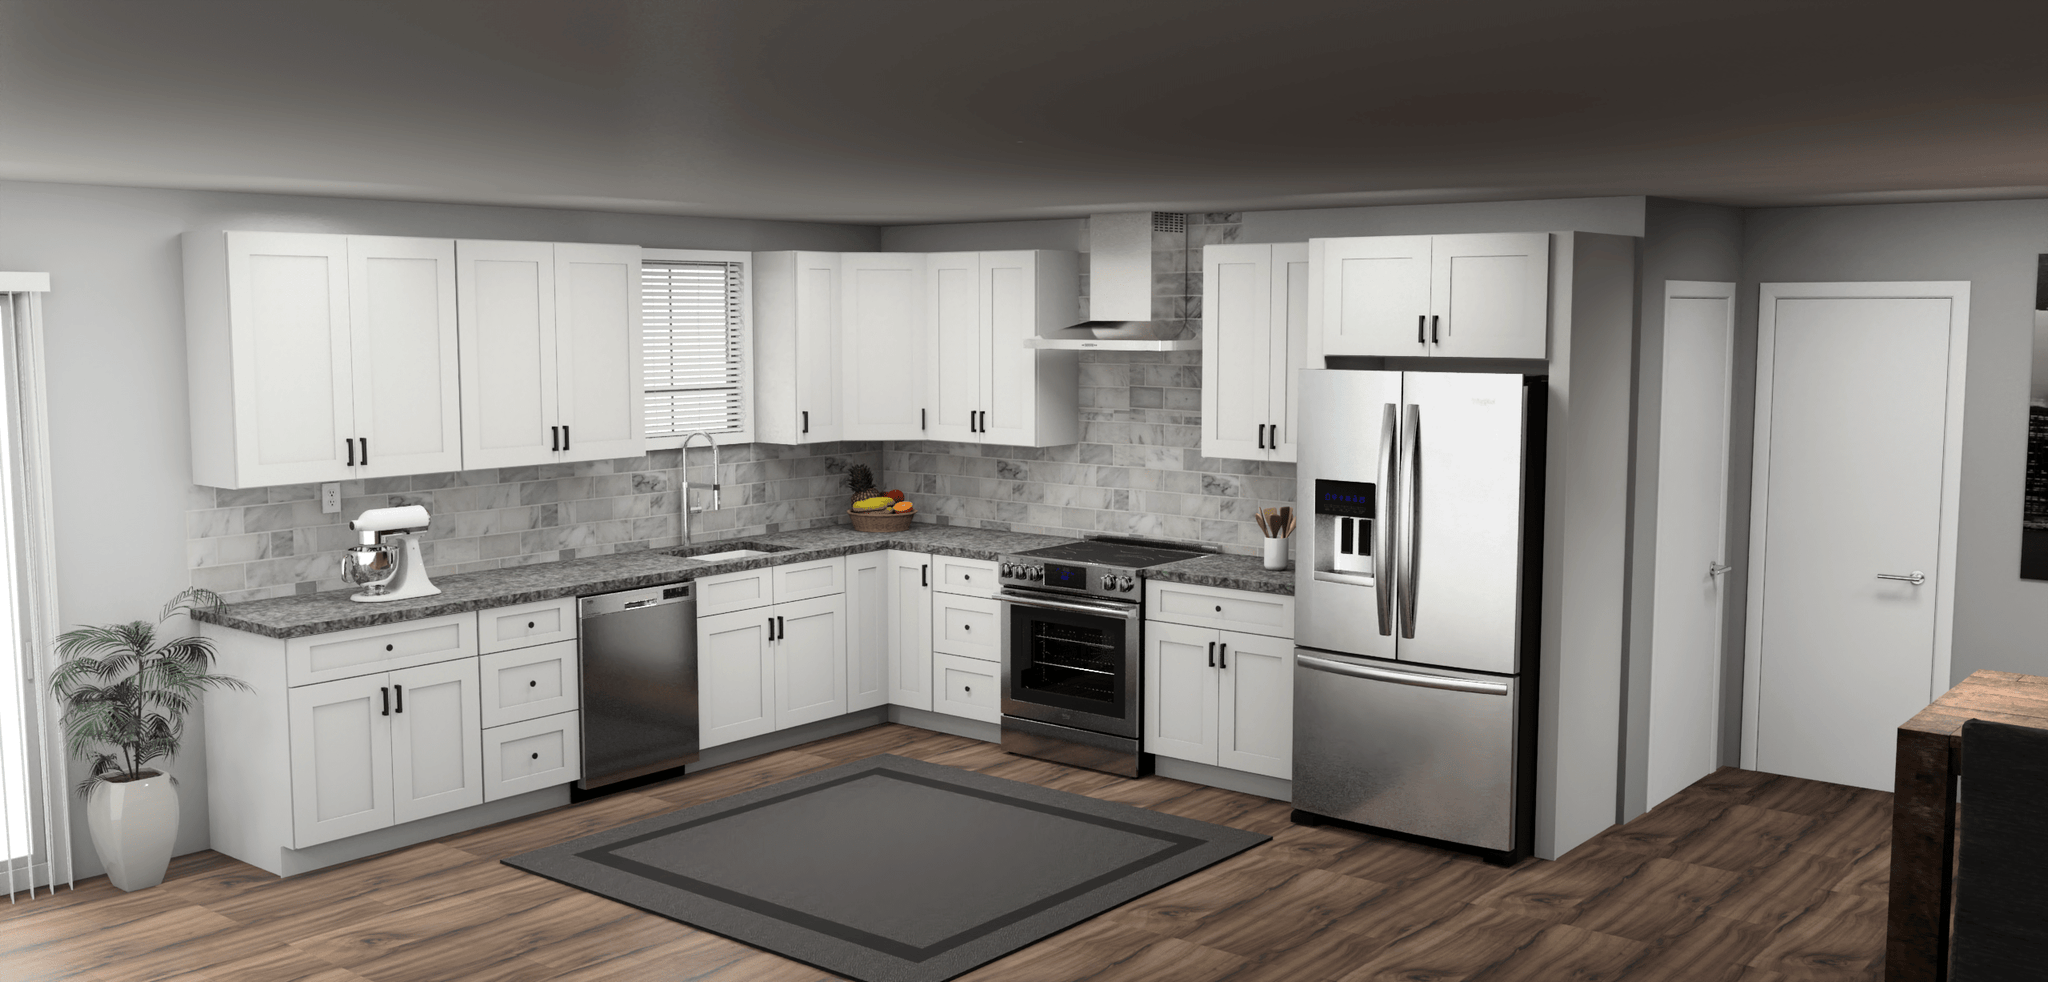 Fabuwood Allure Galaxy Frost 12 x 13 L Shaped Kitchen Main Layout Photo